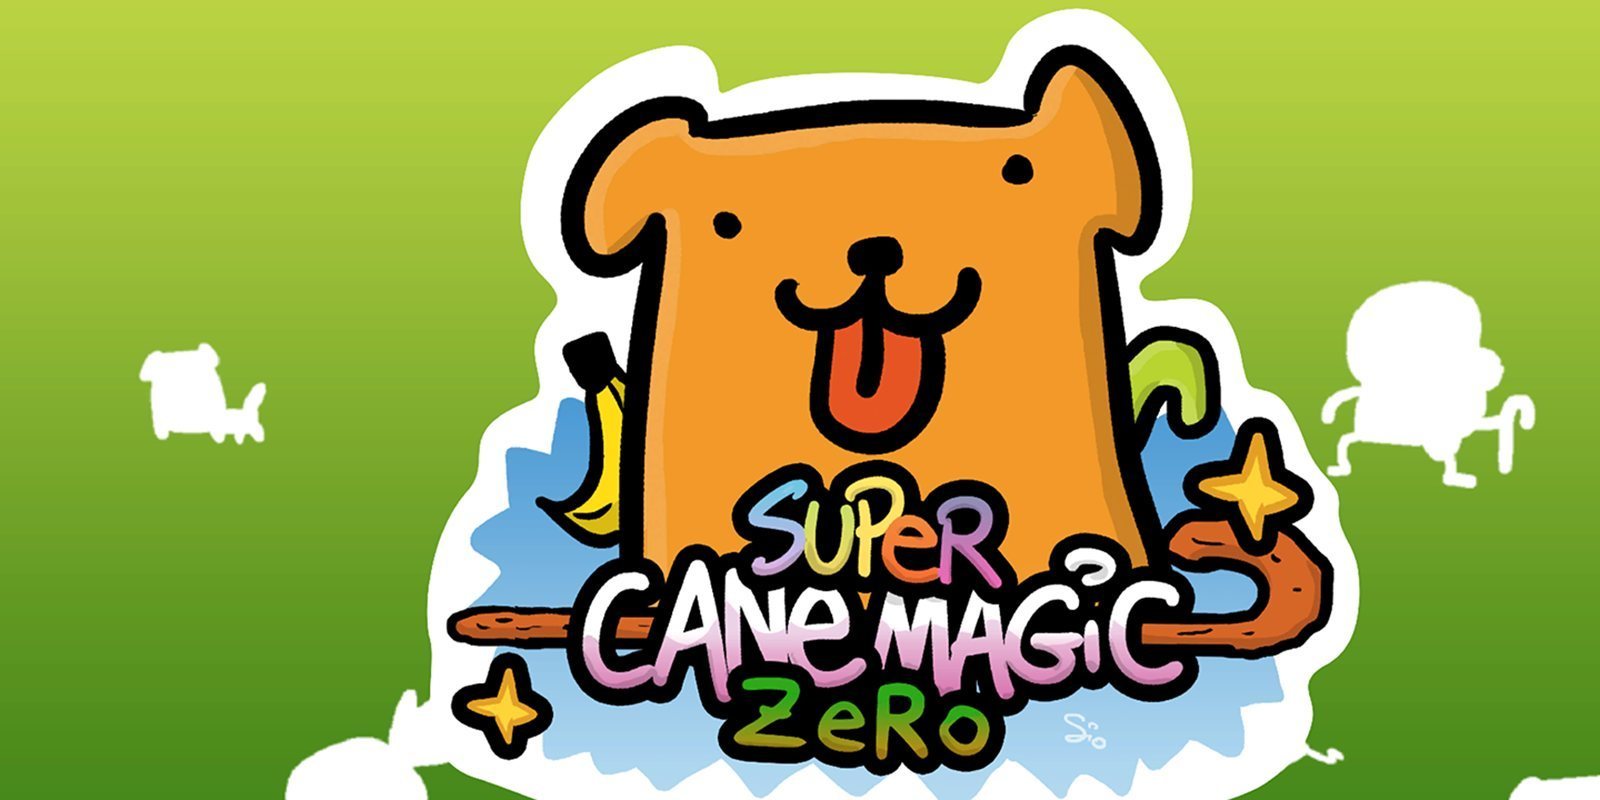 Análisis de 'Super Cane Magic Zero' para PC, una propuesta tan amable como alocada